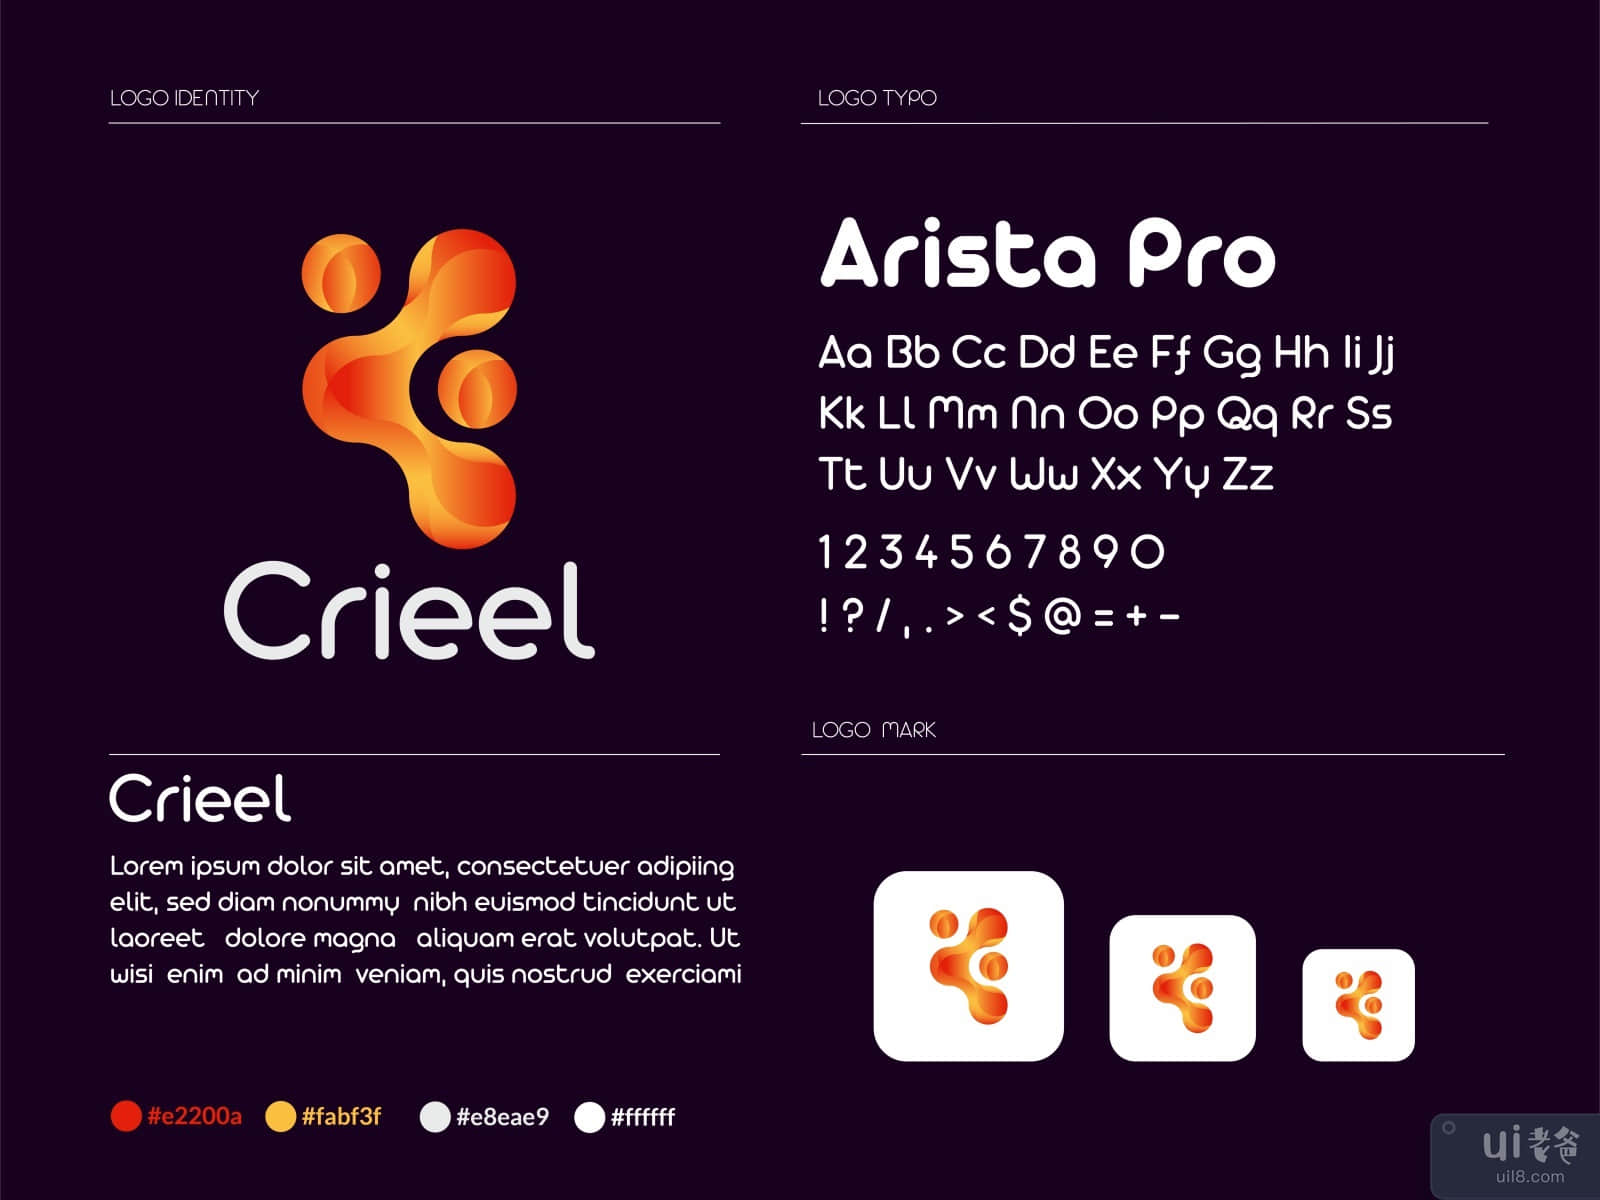 A creative colorful logo : Crieel